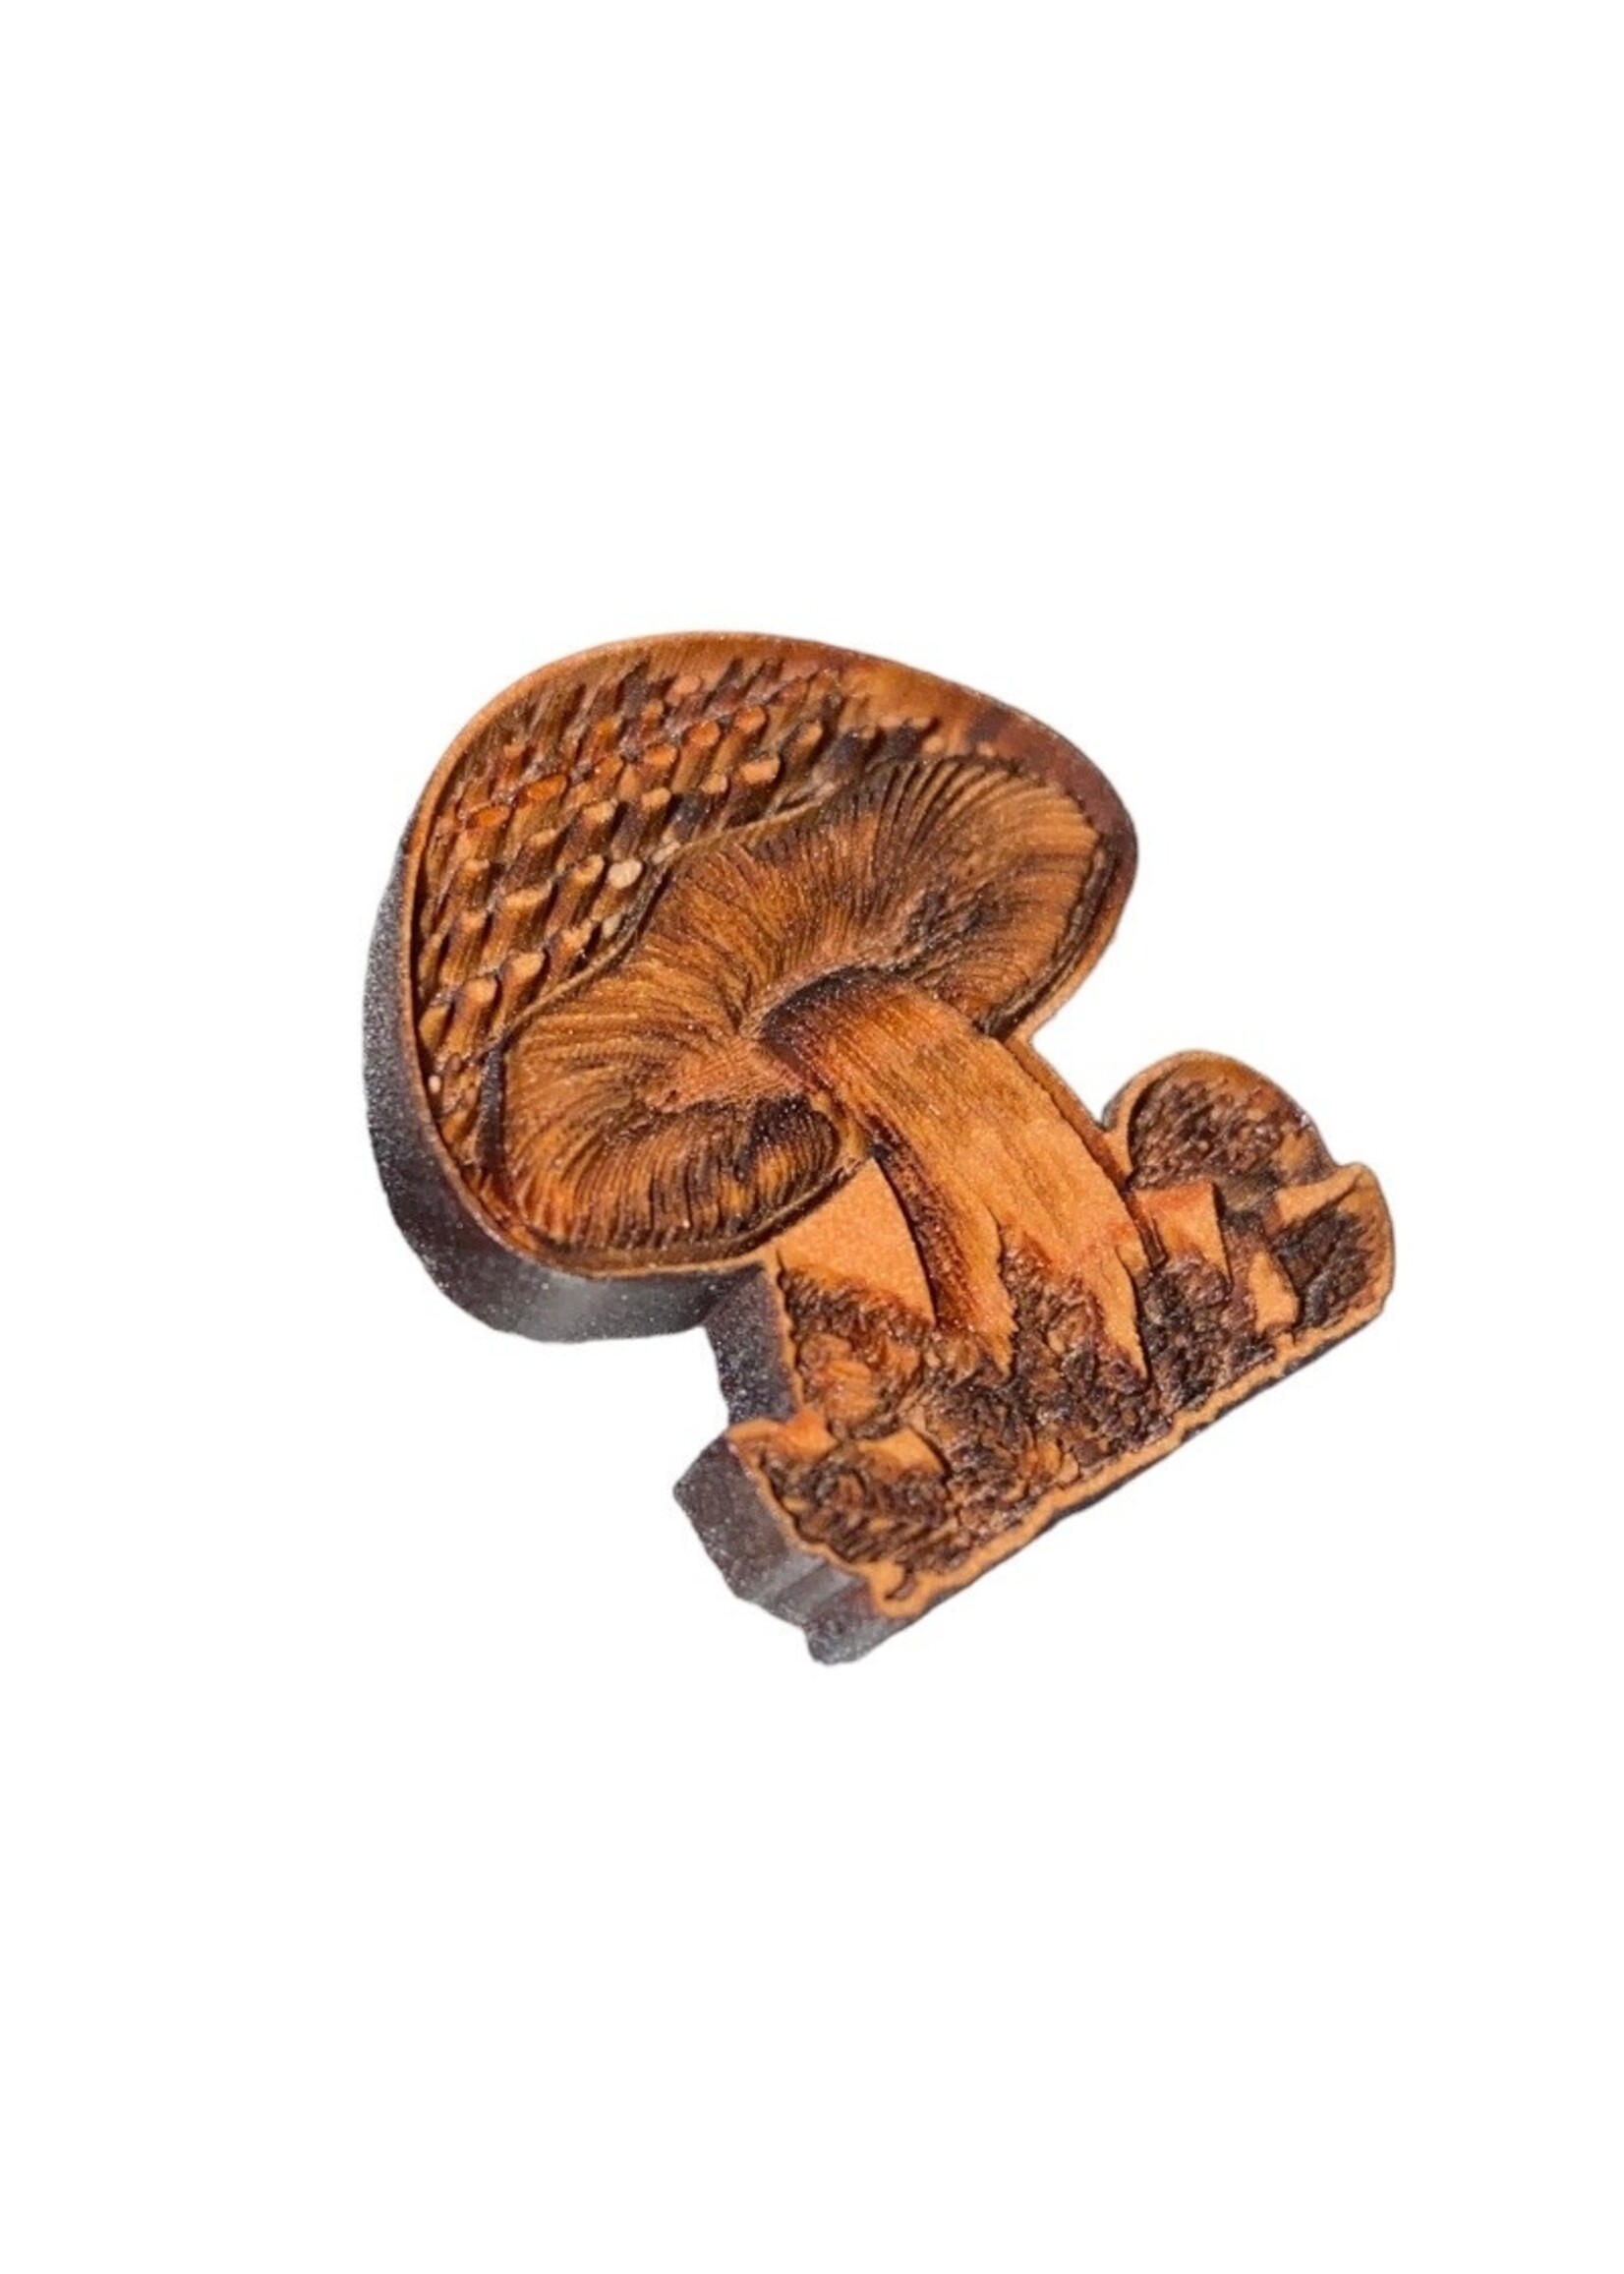 Collectible Pin (Redwood) Mushroom & Ferns